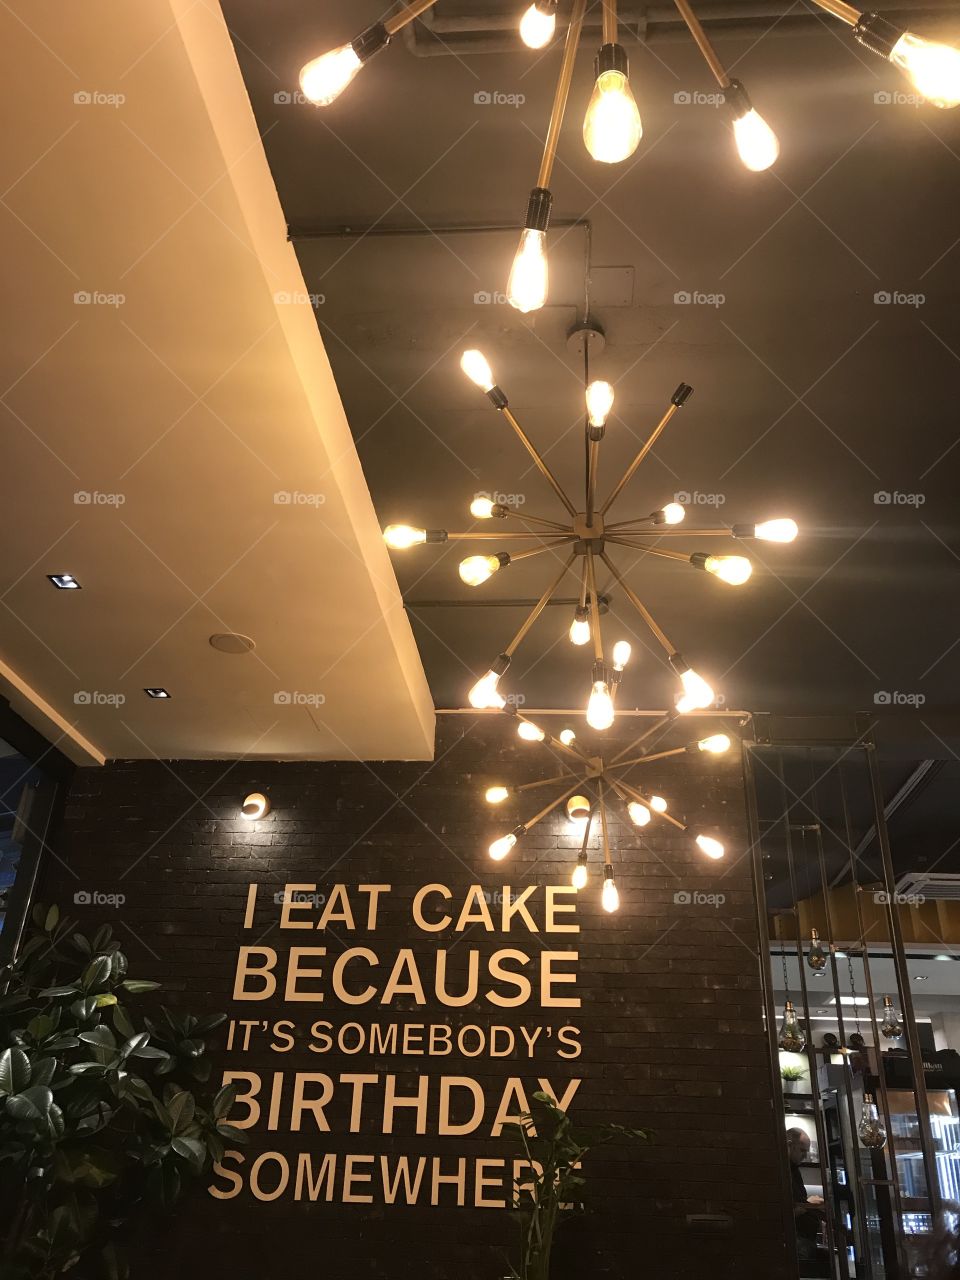 I eat cake because it’s somebody’s birthday somewhere.